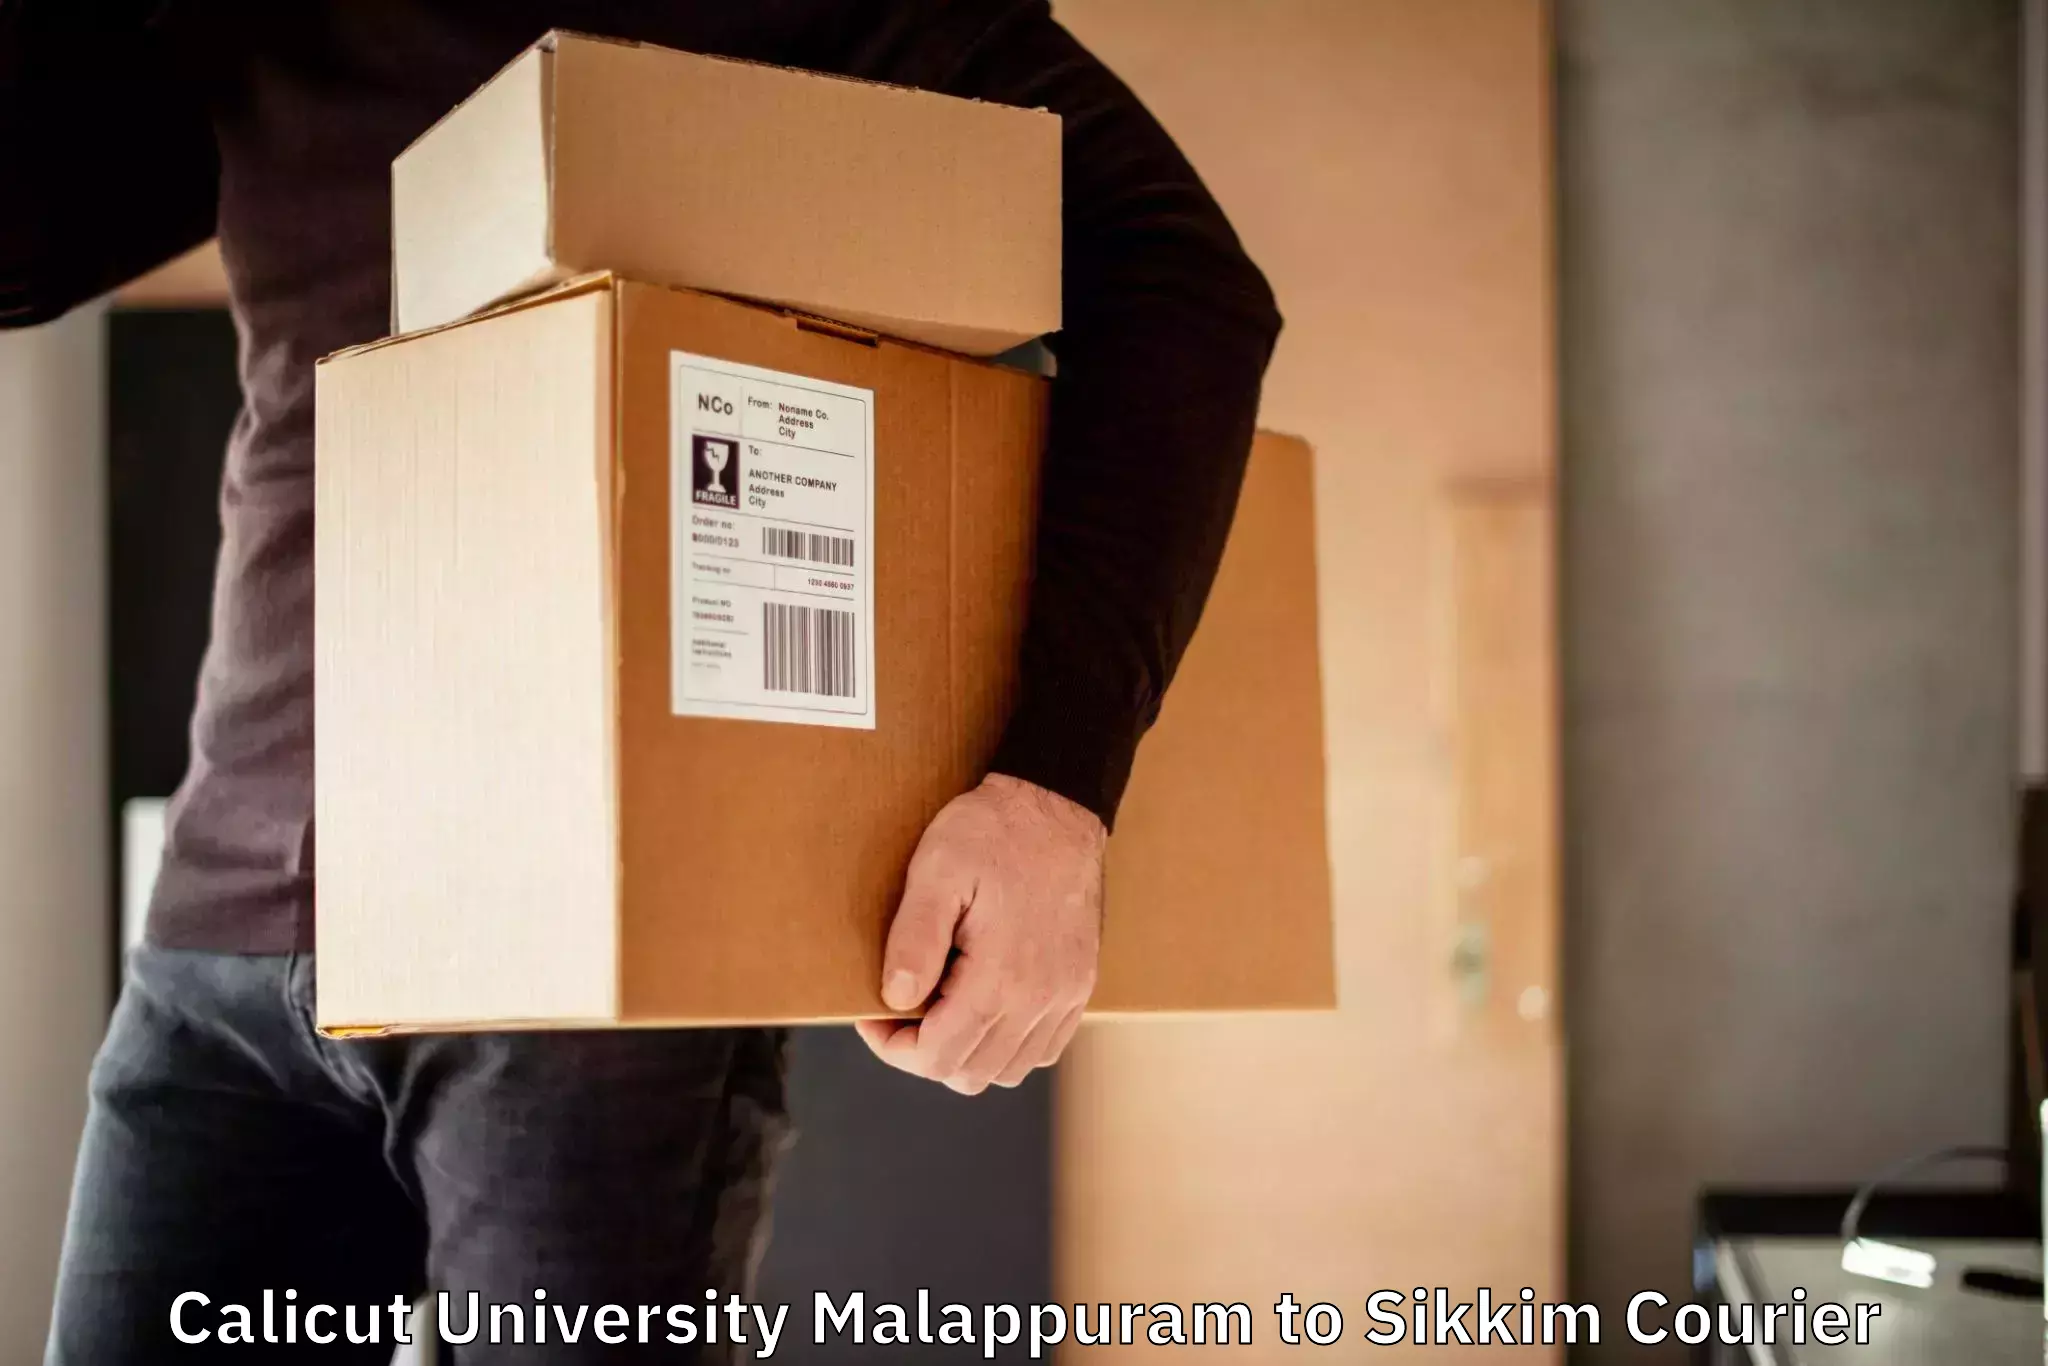 Nationwide shipping coverage Calicut University Malappuram to Sikkim